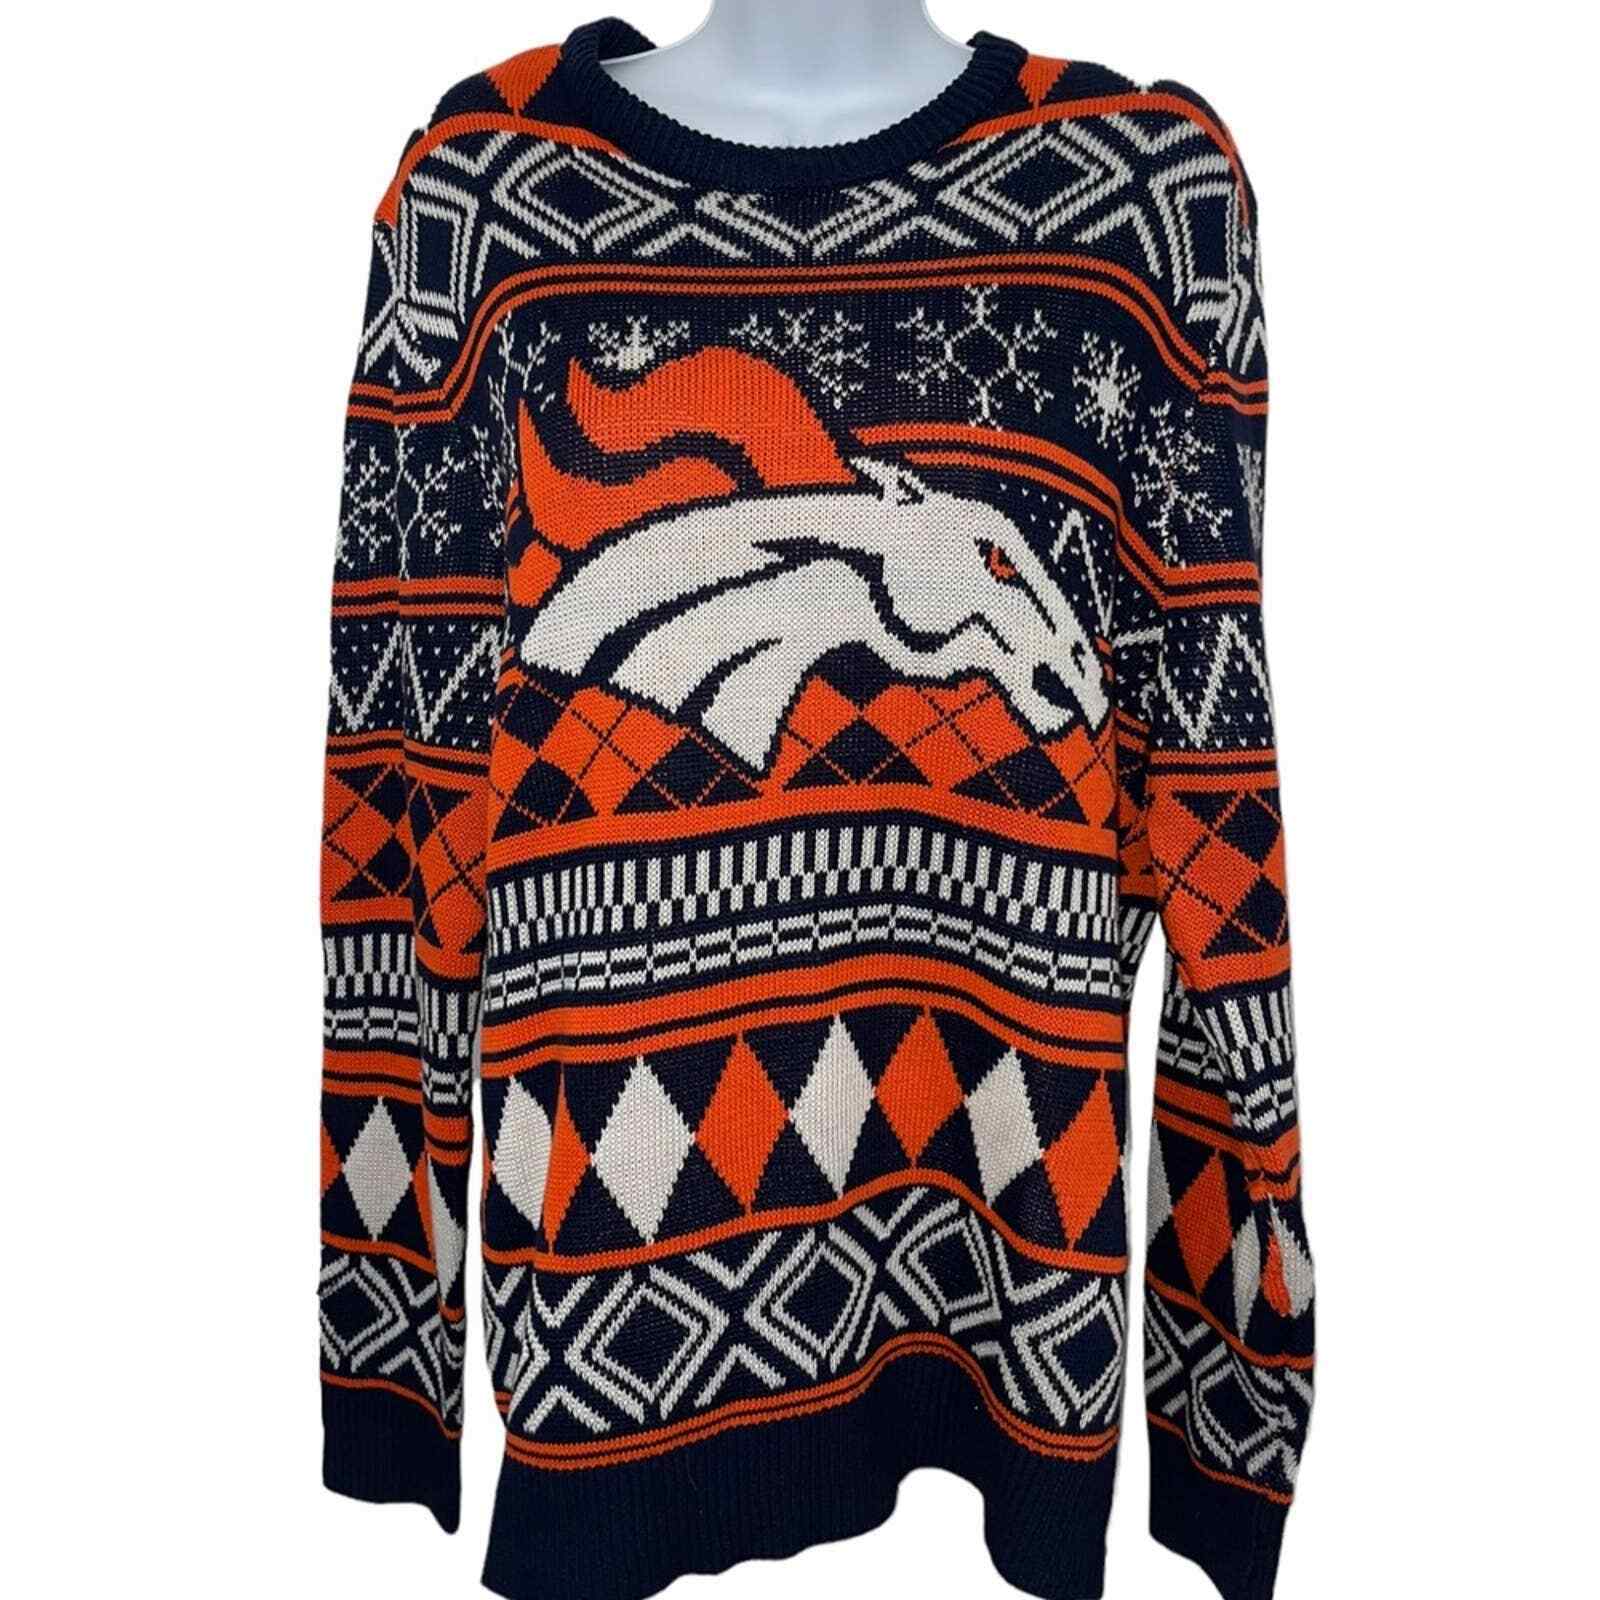 broncos holiday sweater